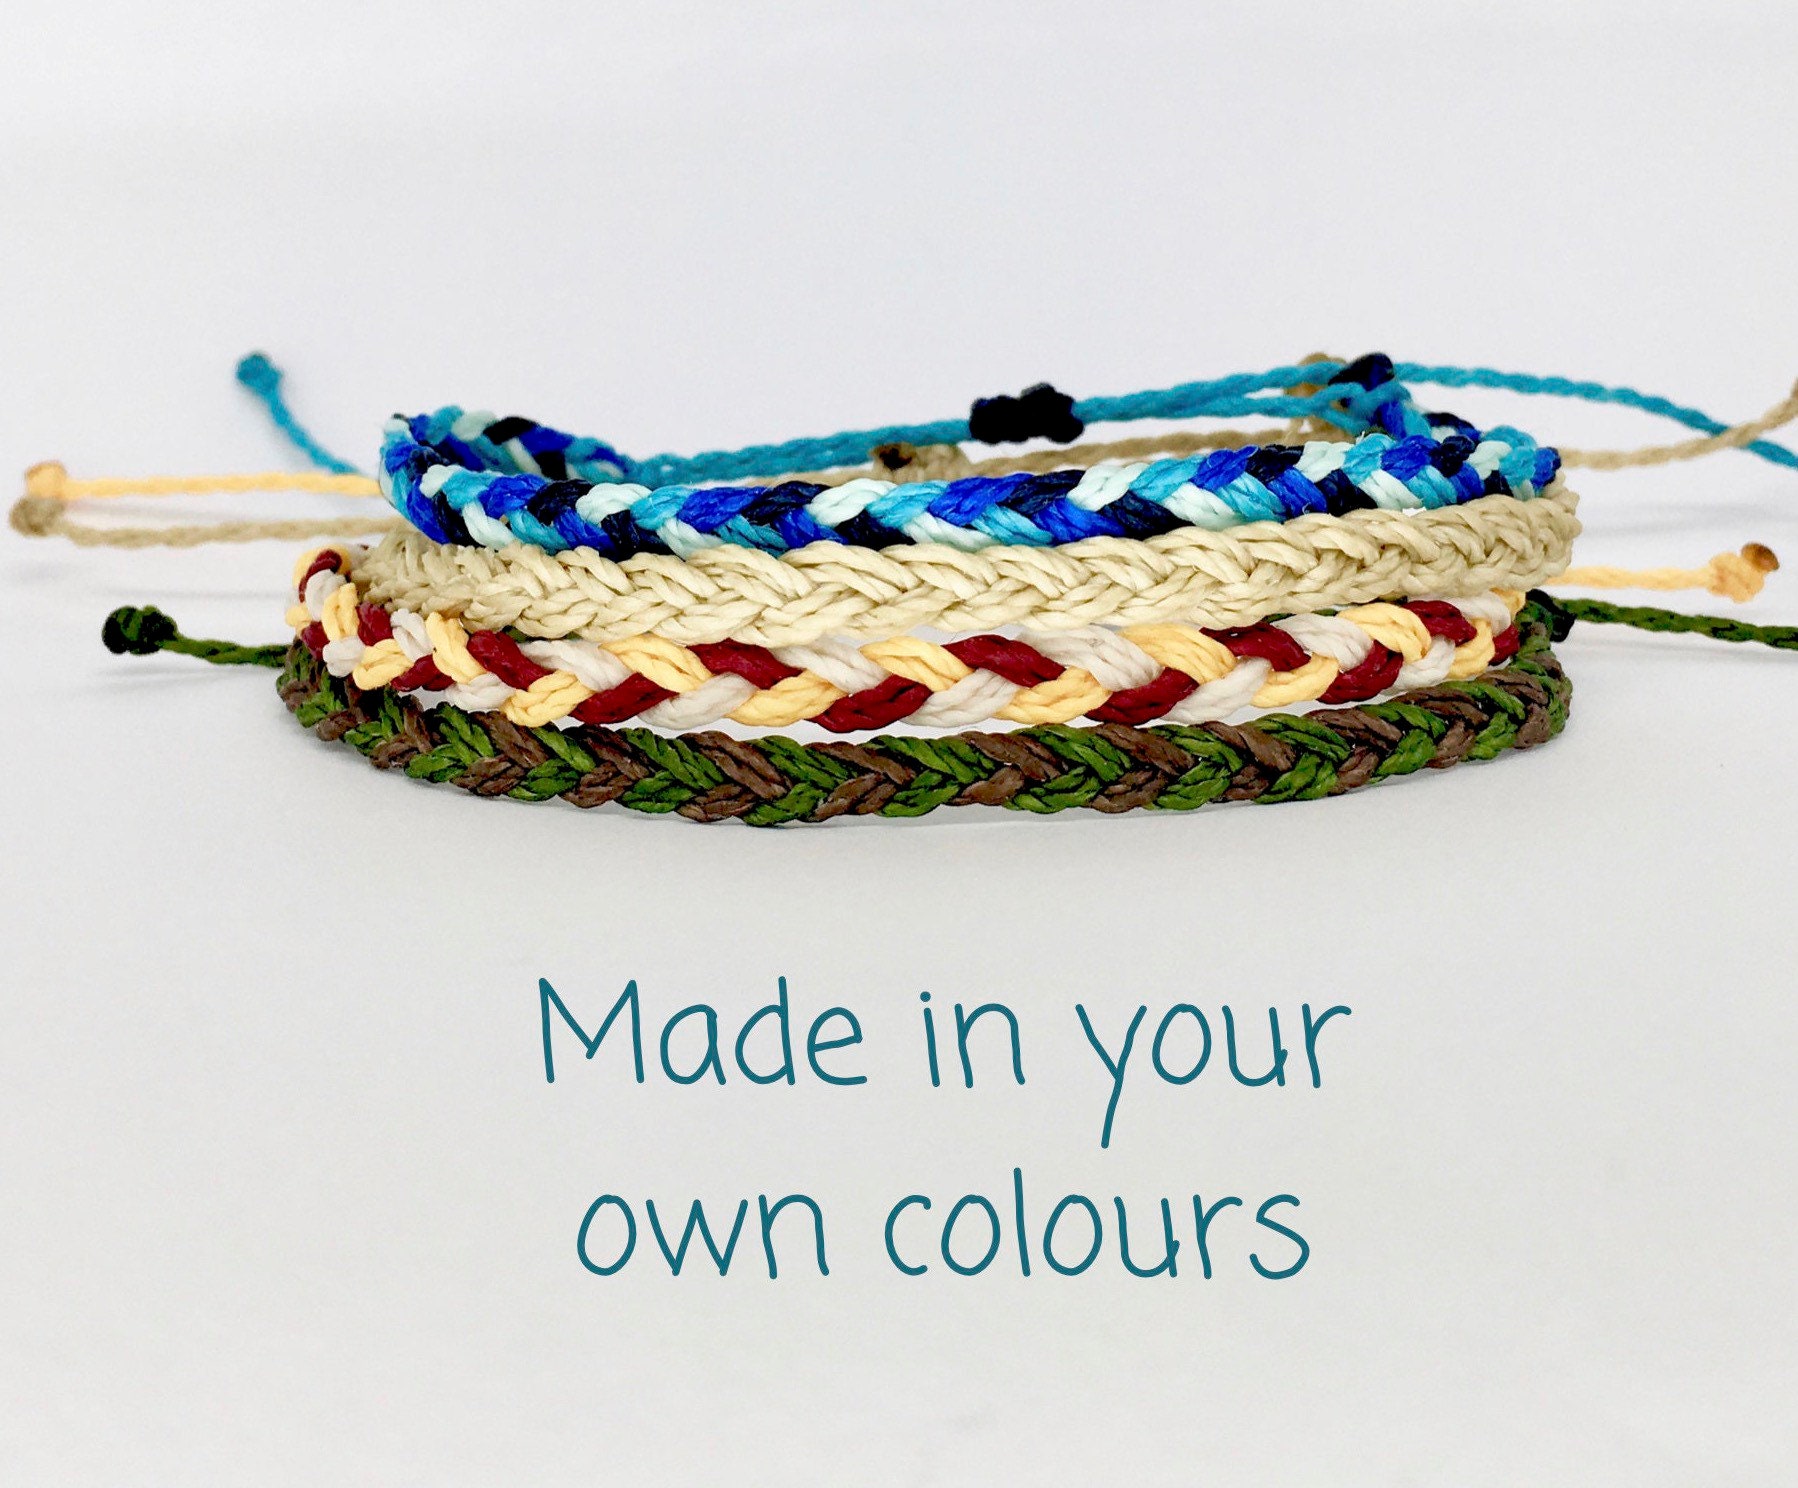 Macrame Color Block Bracelet Set - Customize The Colors and Beads! String Surf Bracelet (Only 1 Bracelet)